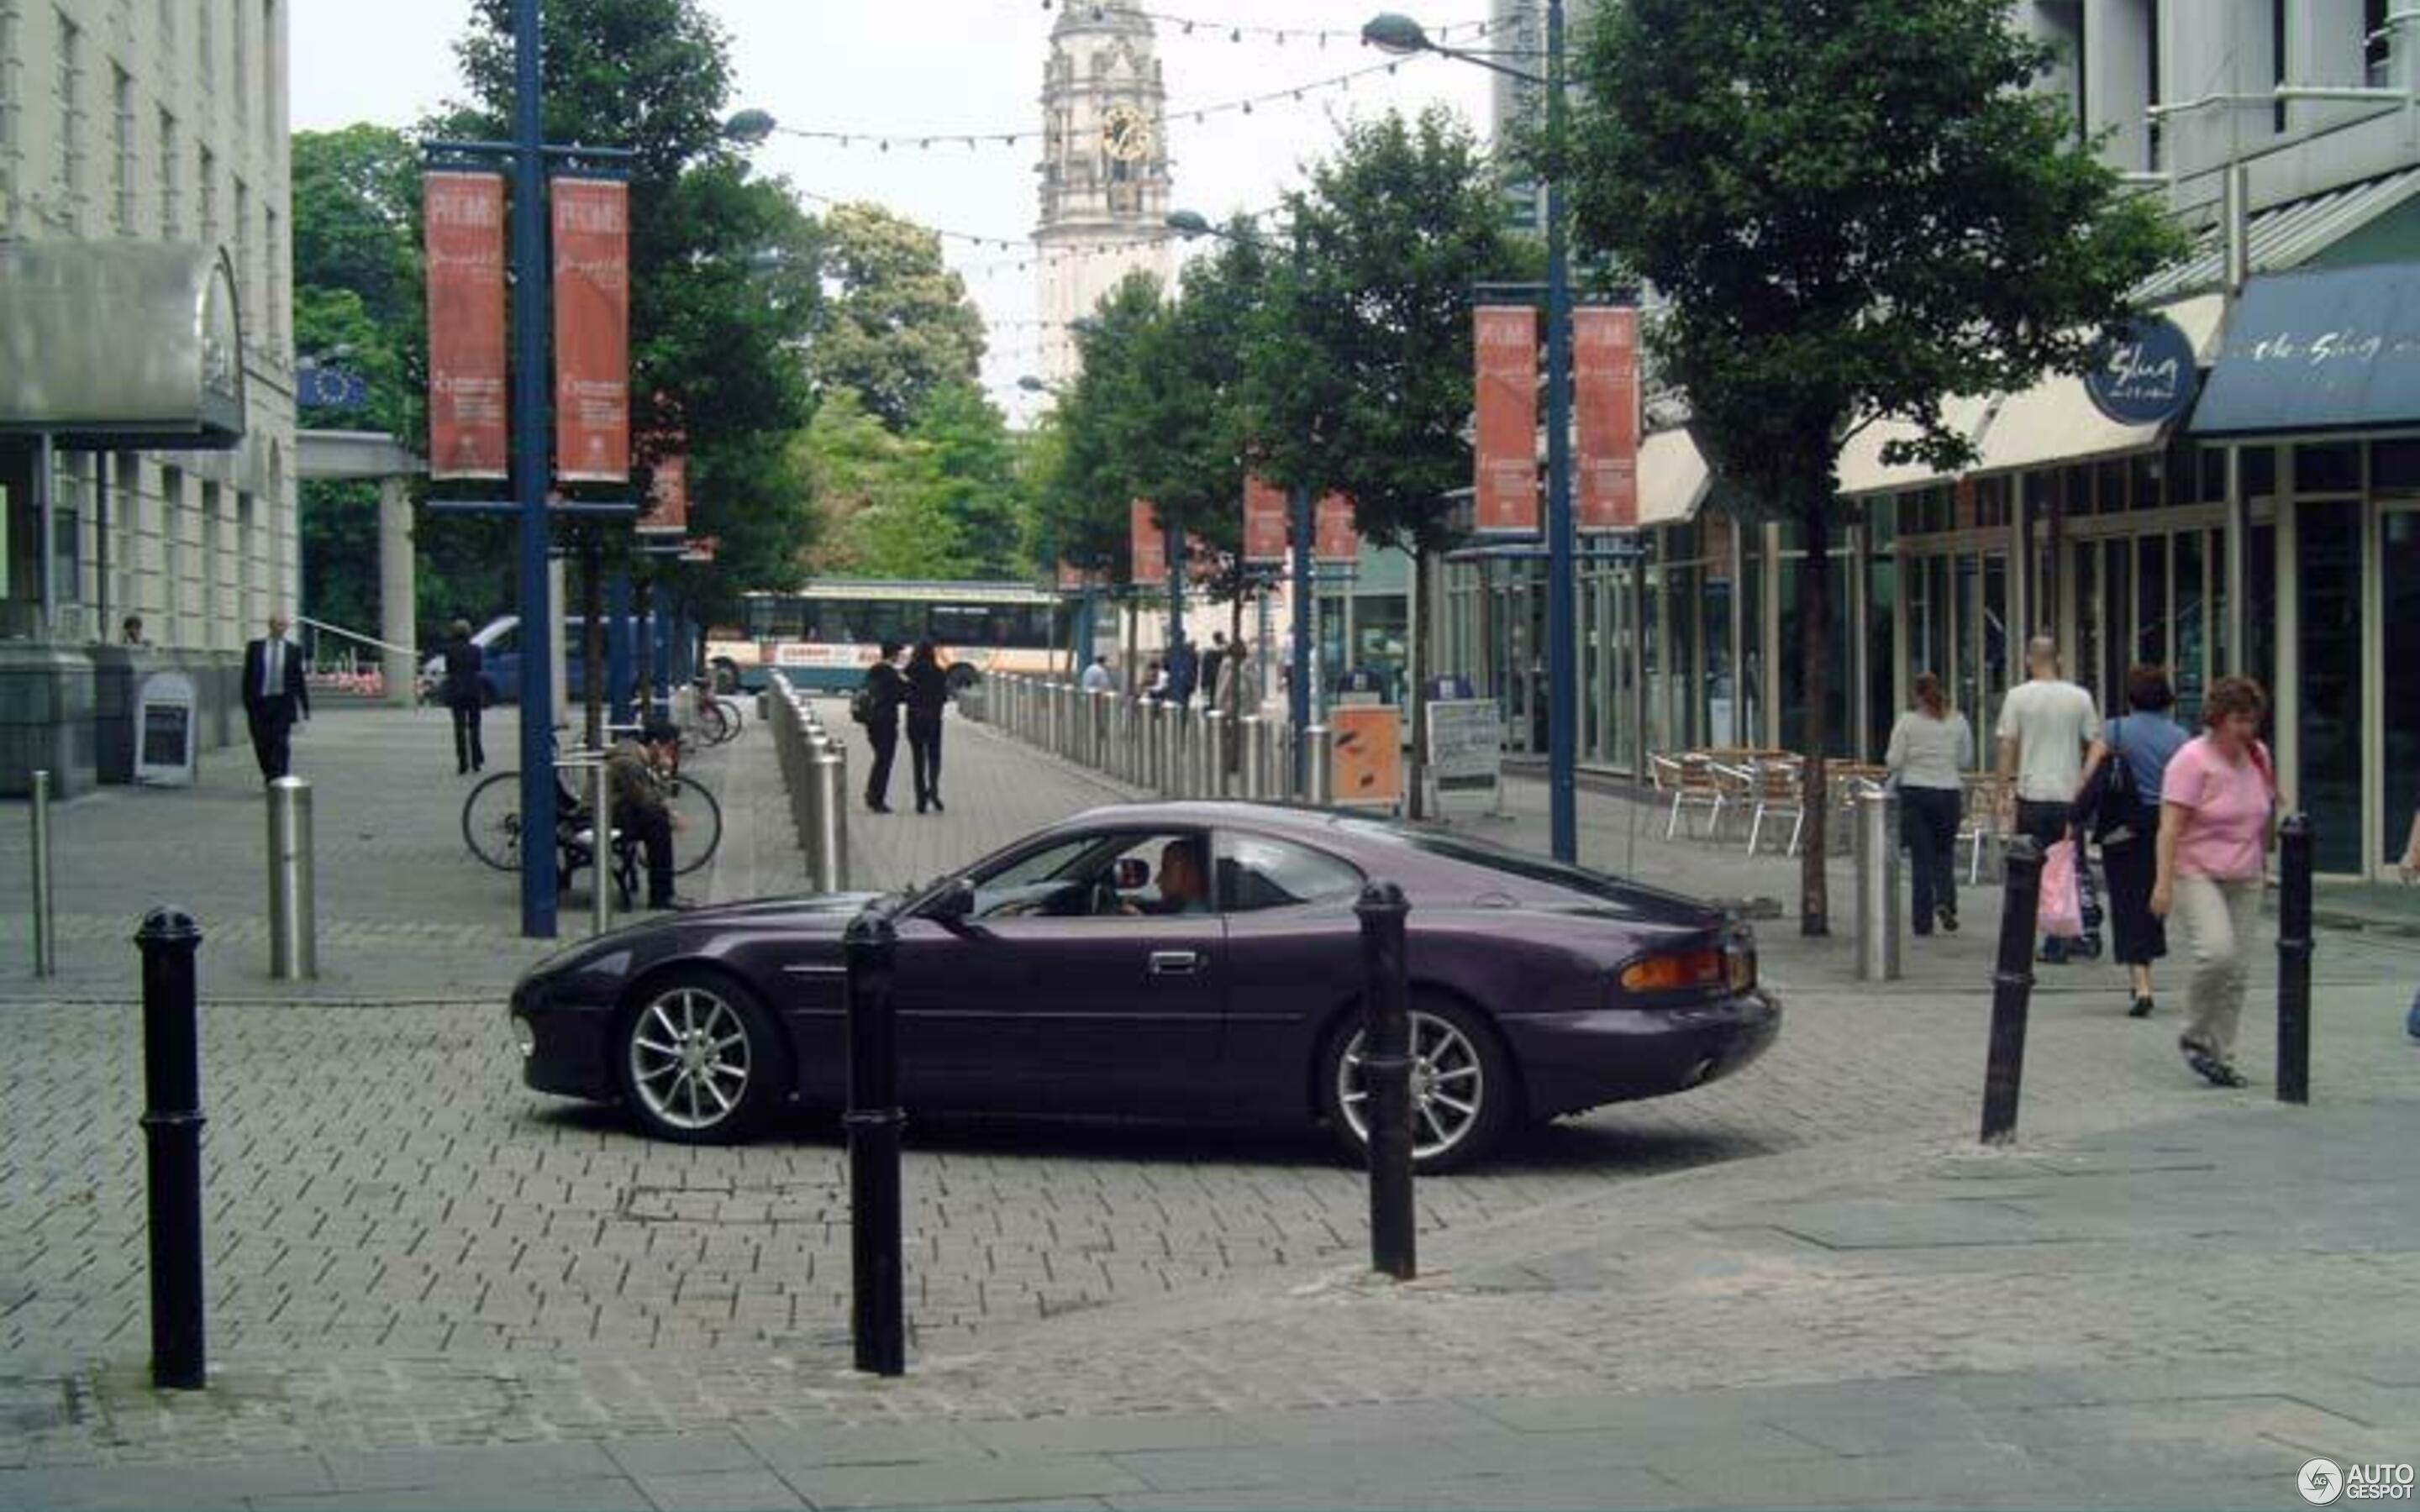 Aston Martin DB7 Vantage